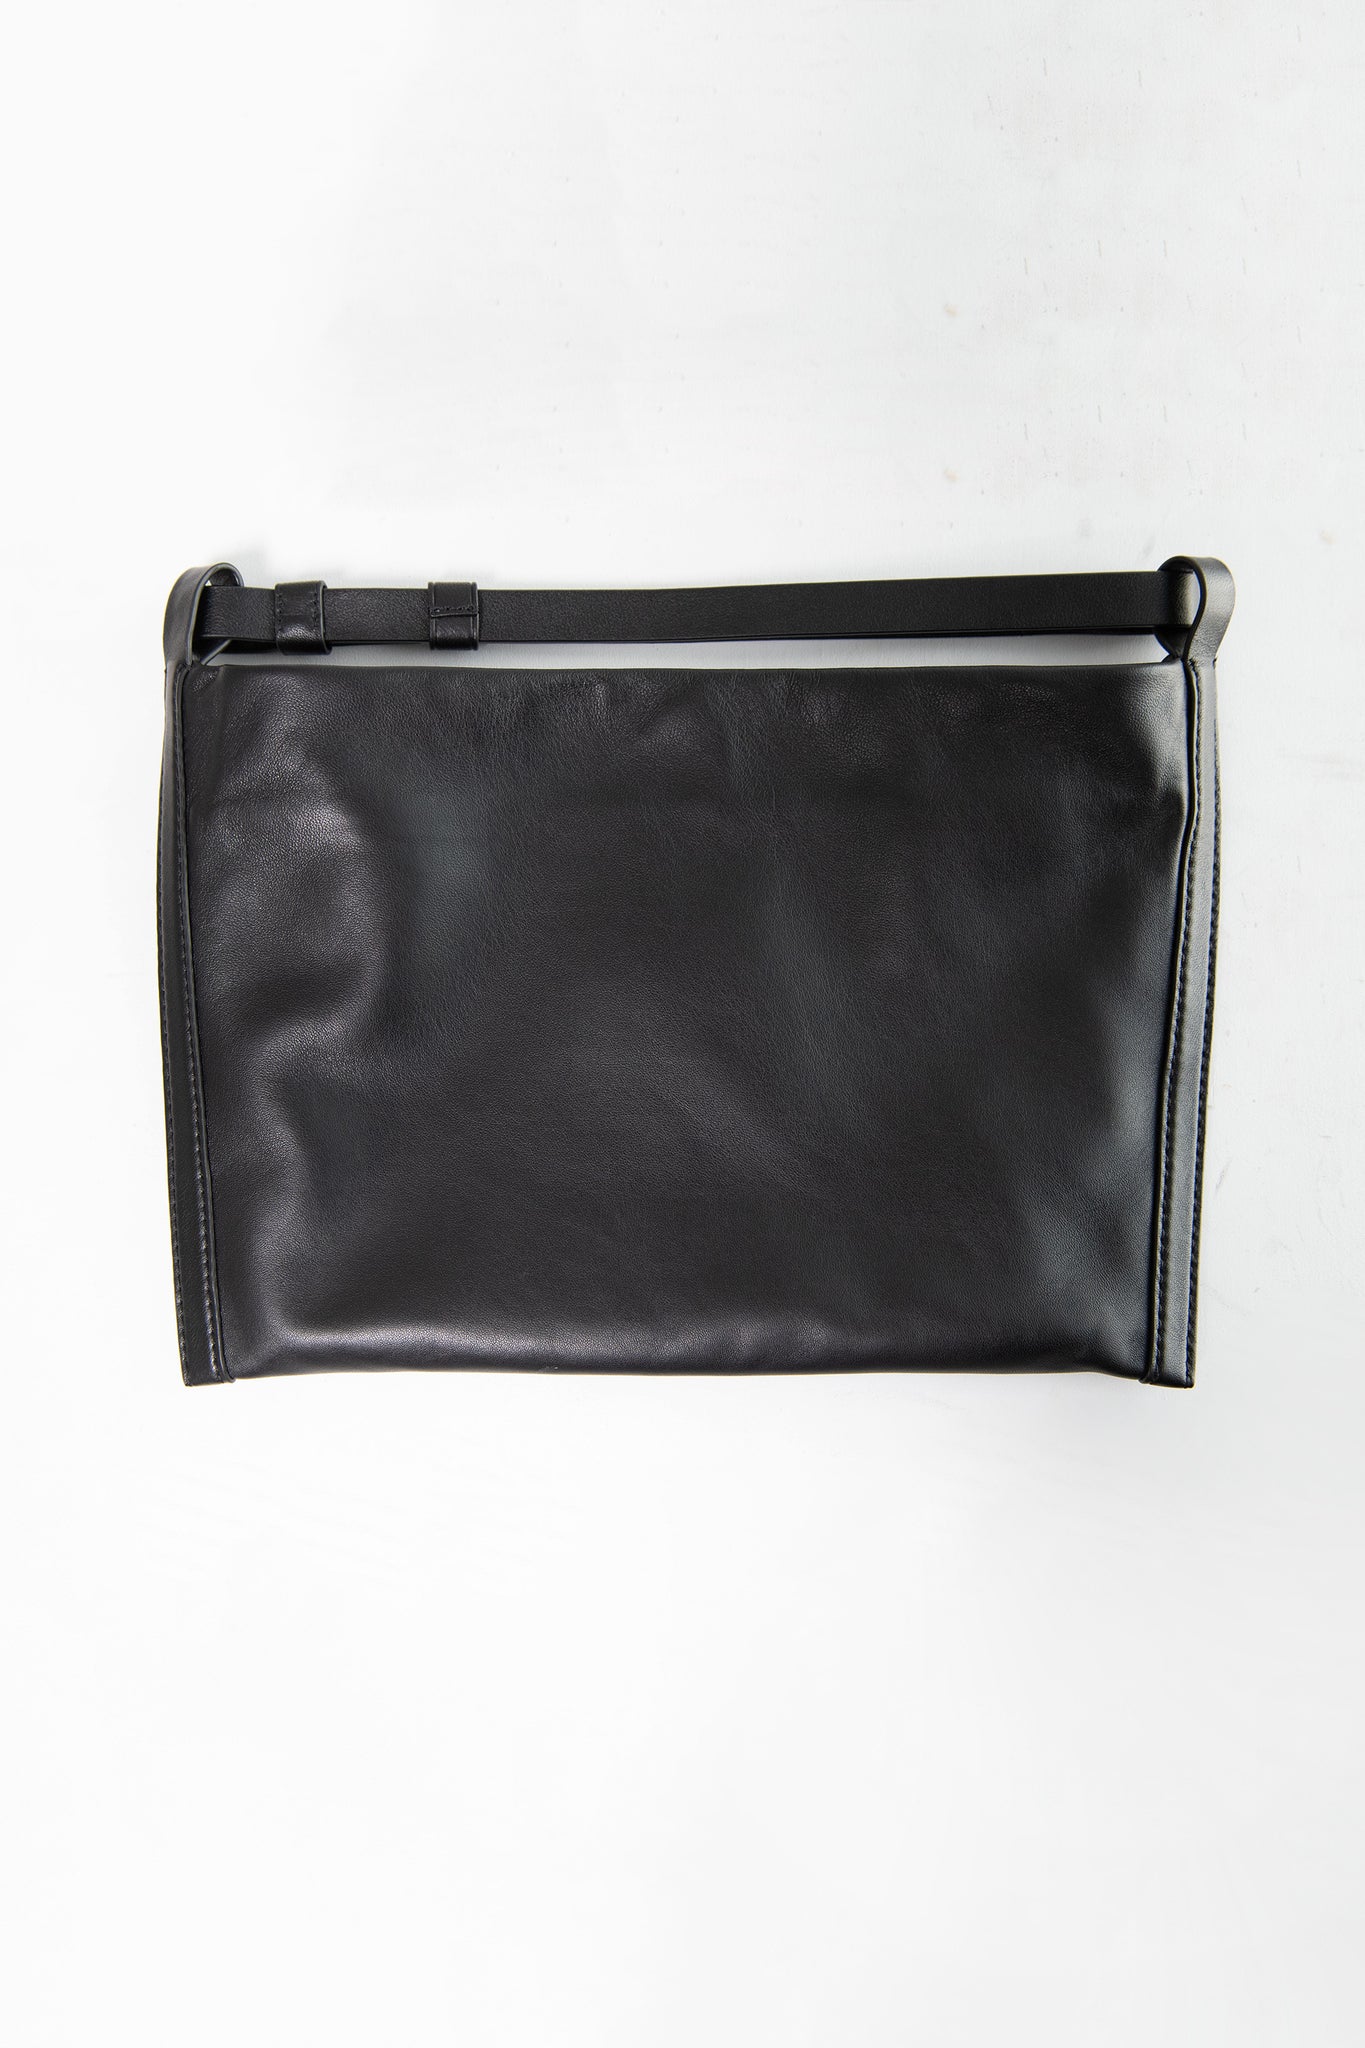 Proenza Schouler White Label - Minetta Bag, Black